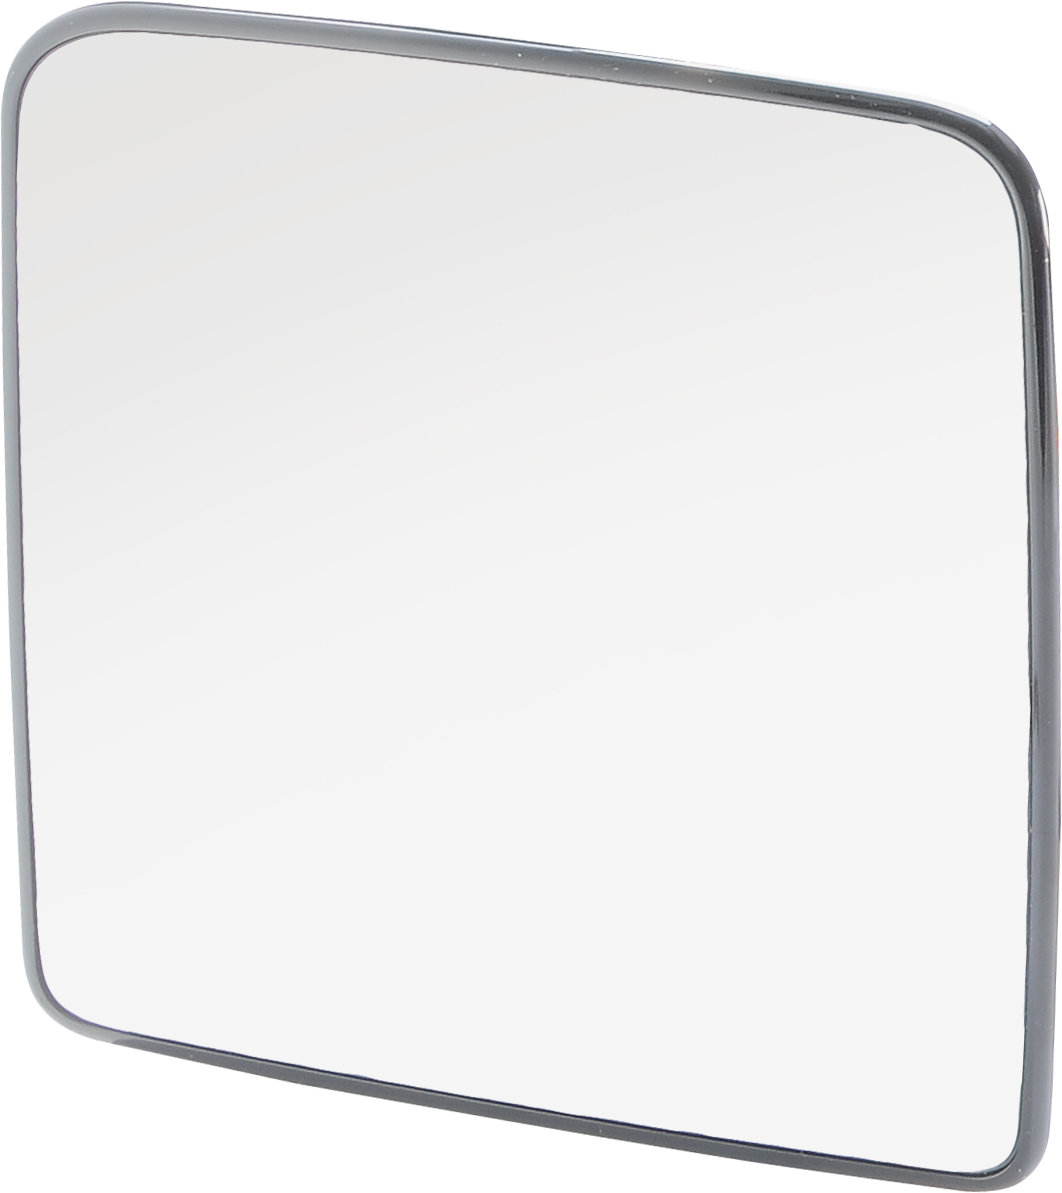 Mopar Replacement Manual Mirror Glass for 07-10 Jeep Wrangler JK | Quadratec